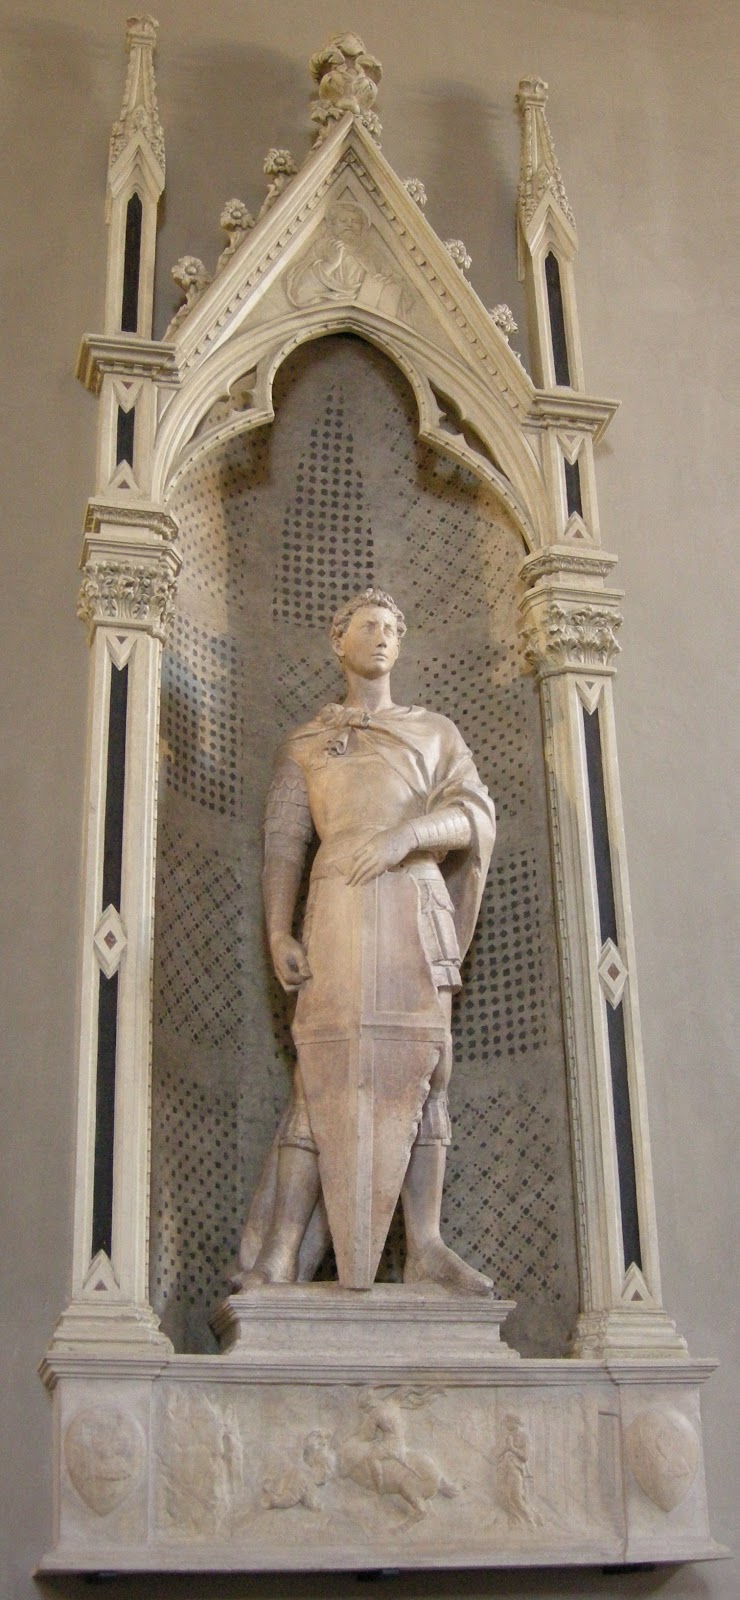 Donatello-1386-1466 (105).jpg